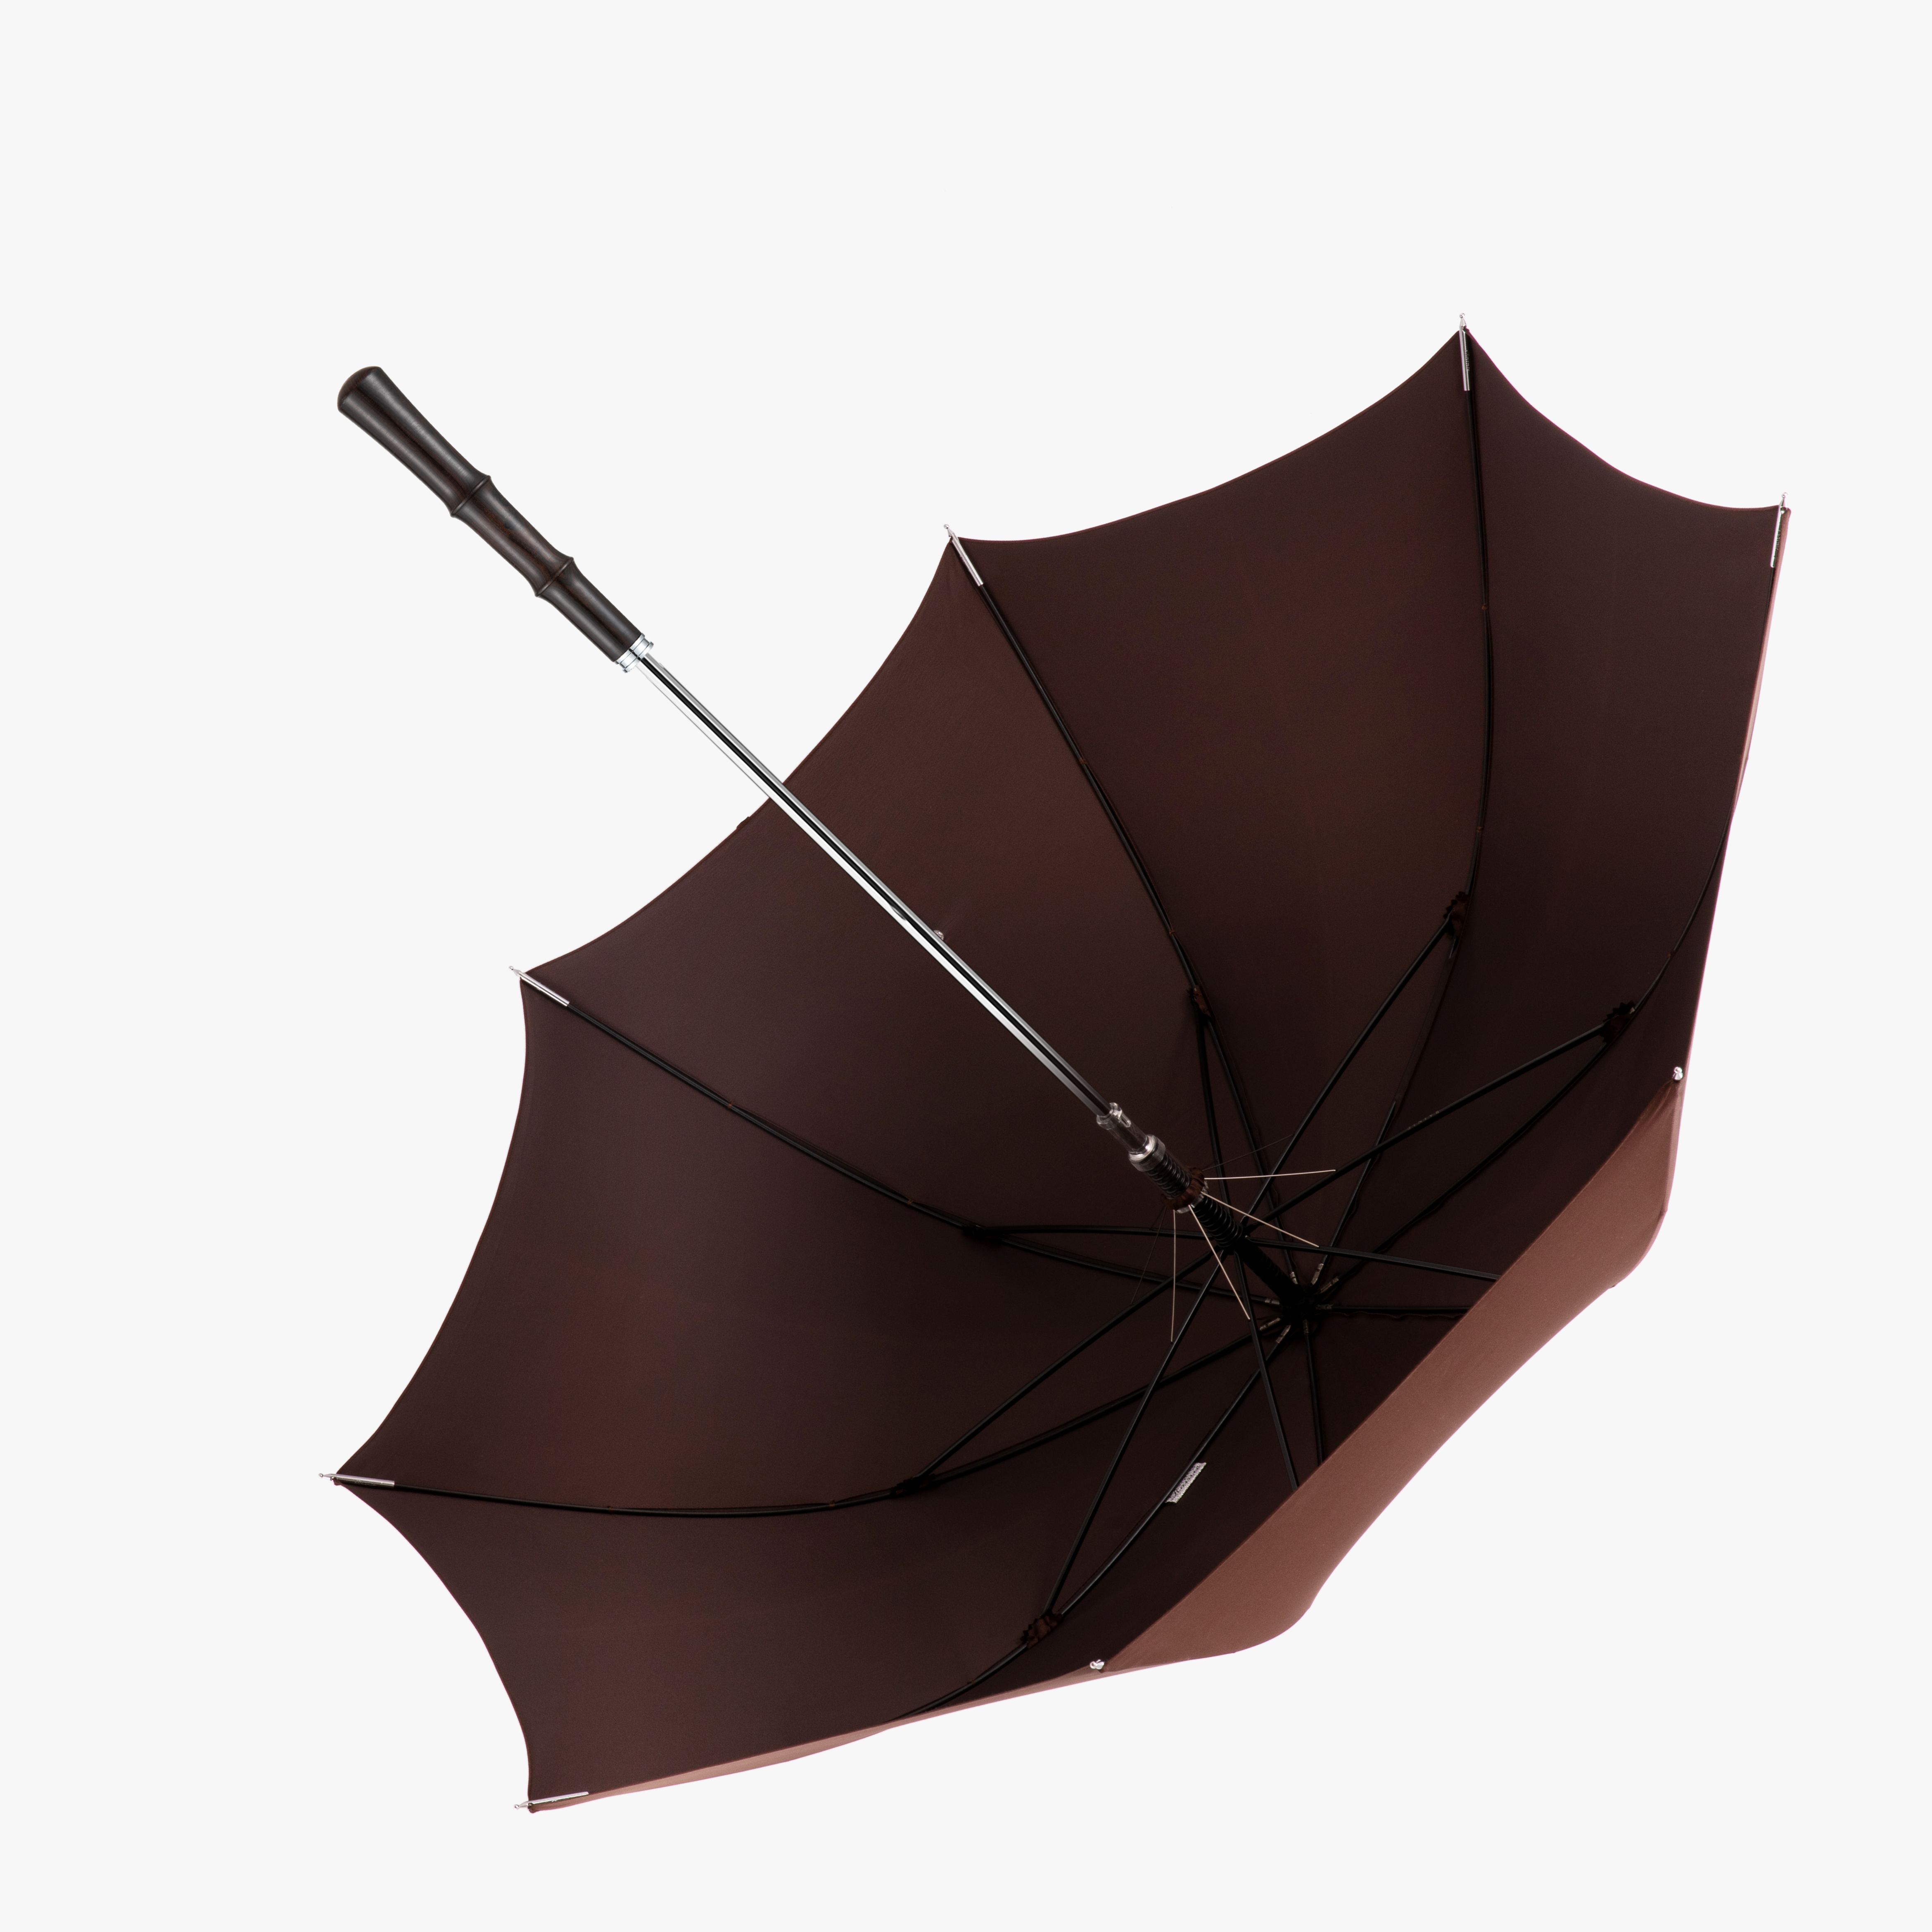 Straight shank solid wood long handle umbrella